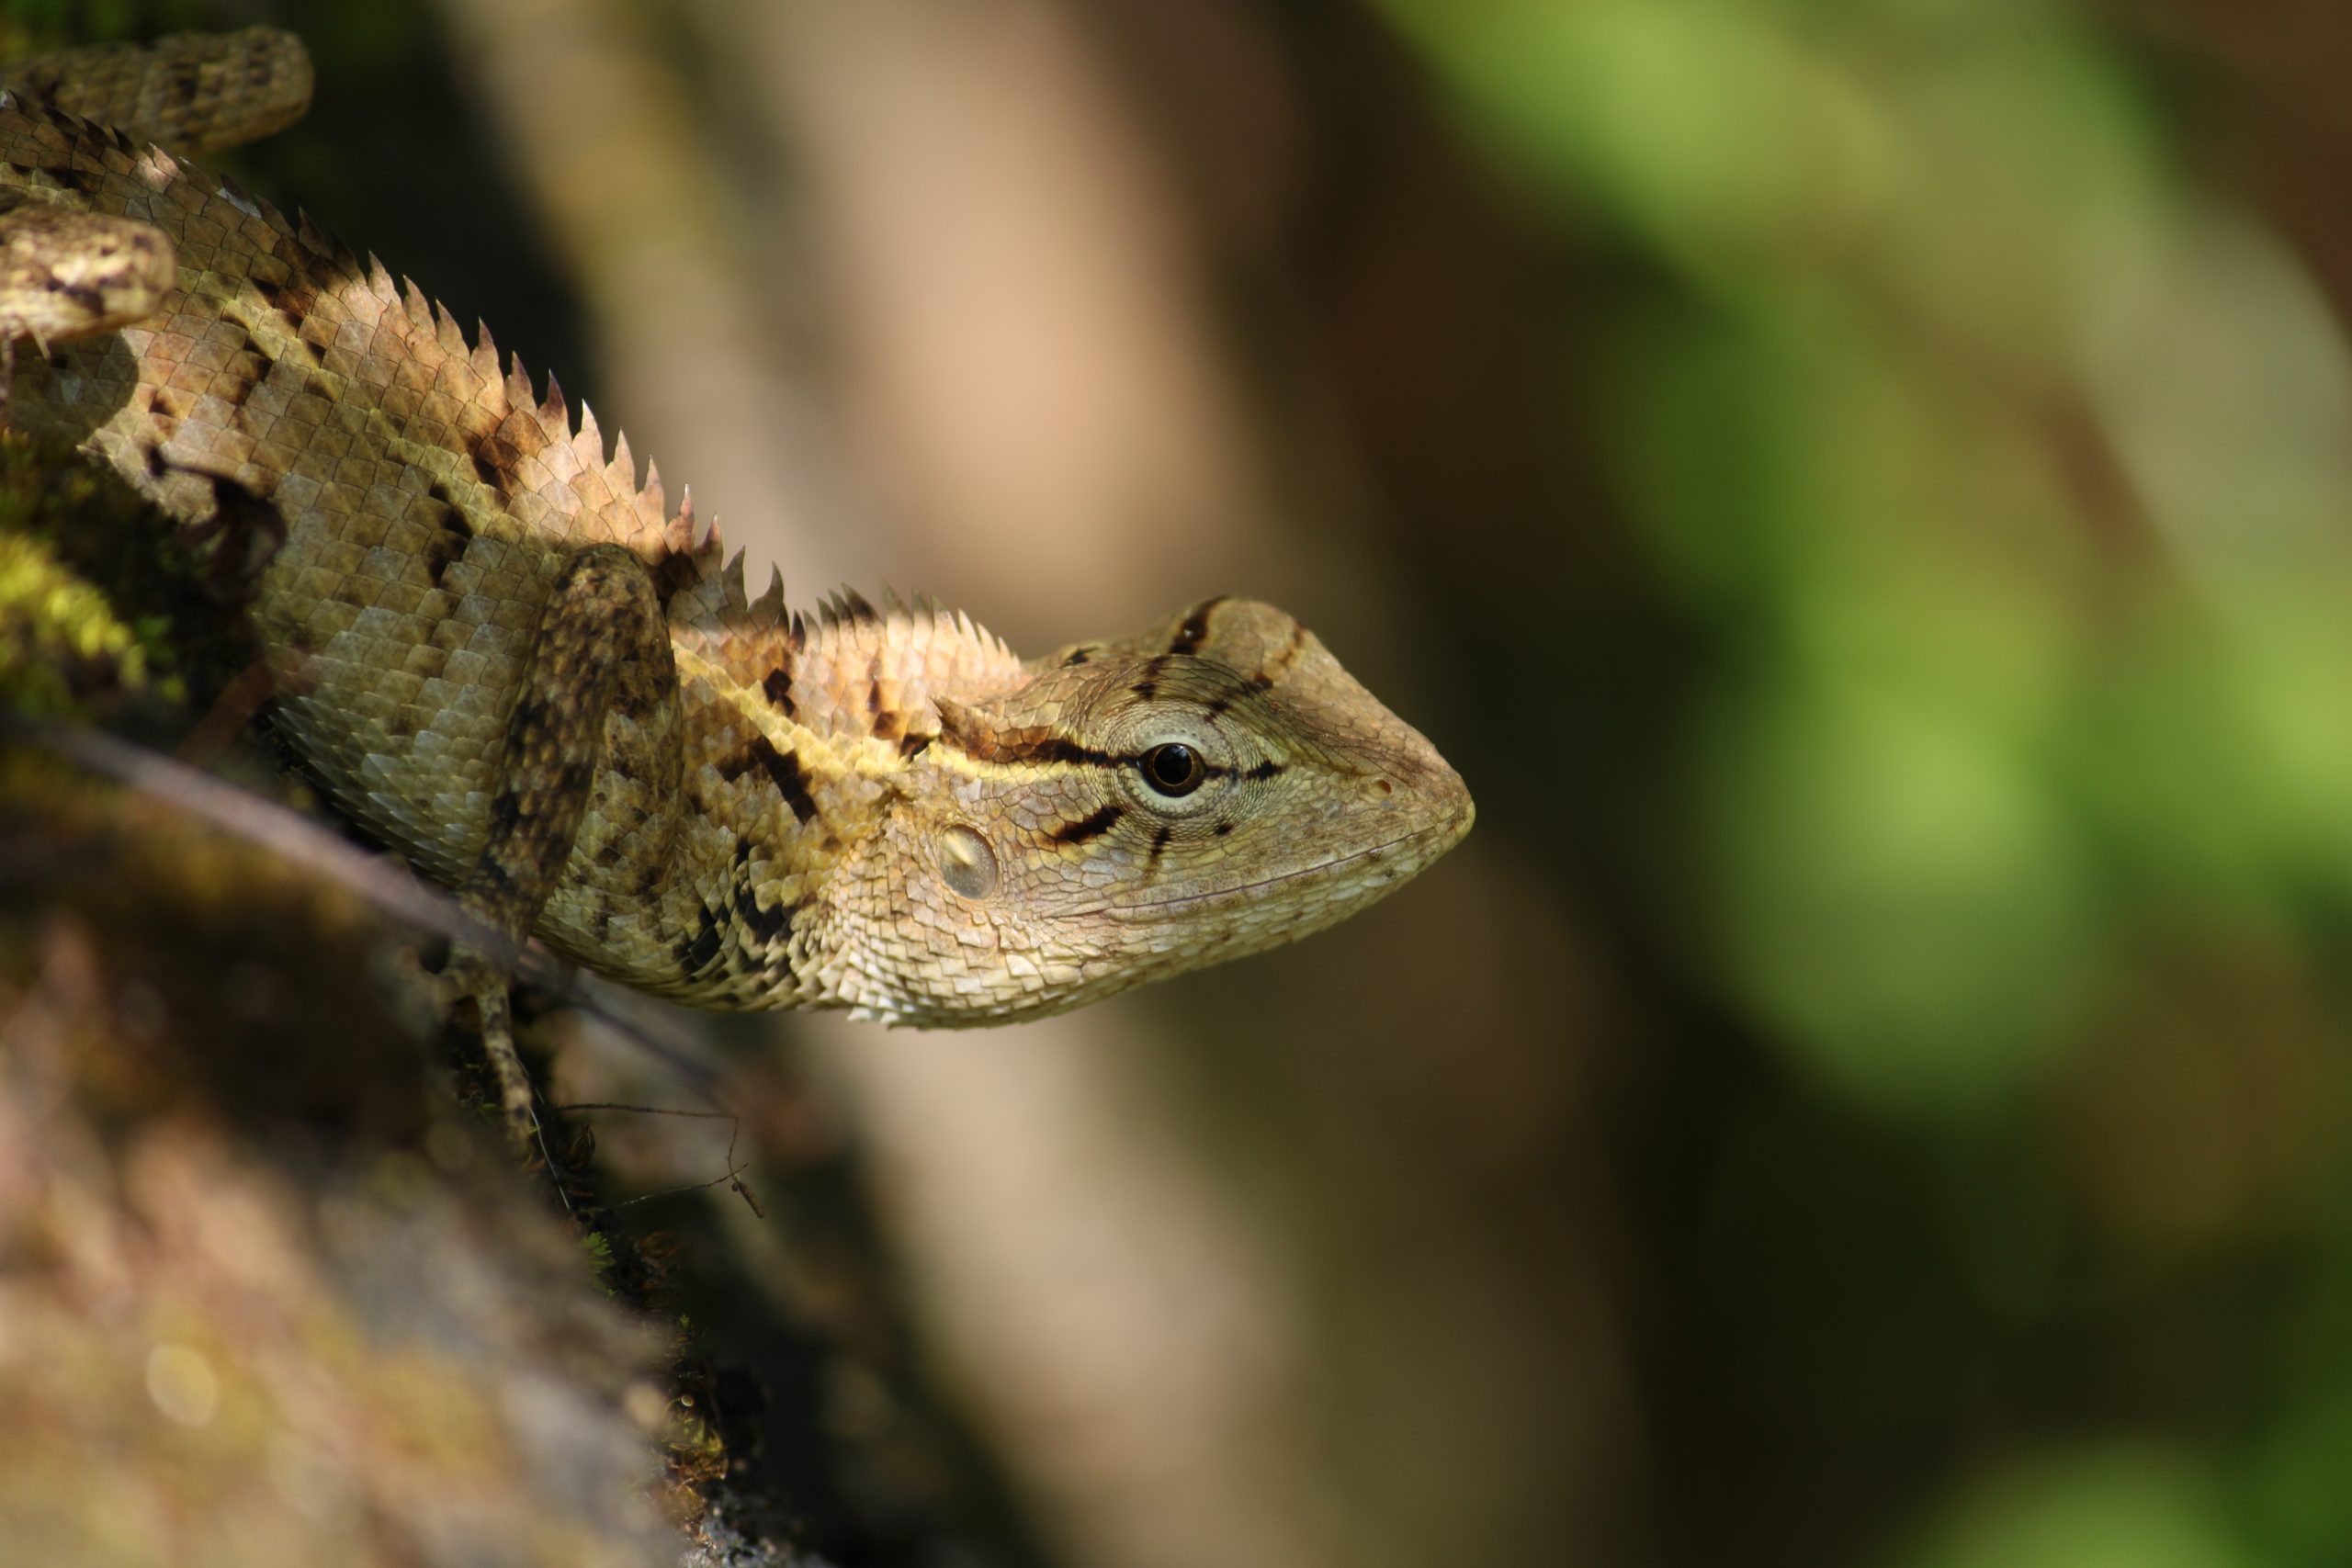 close-up of a chameleon